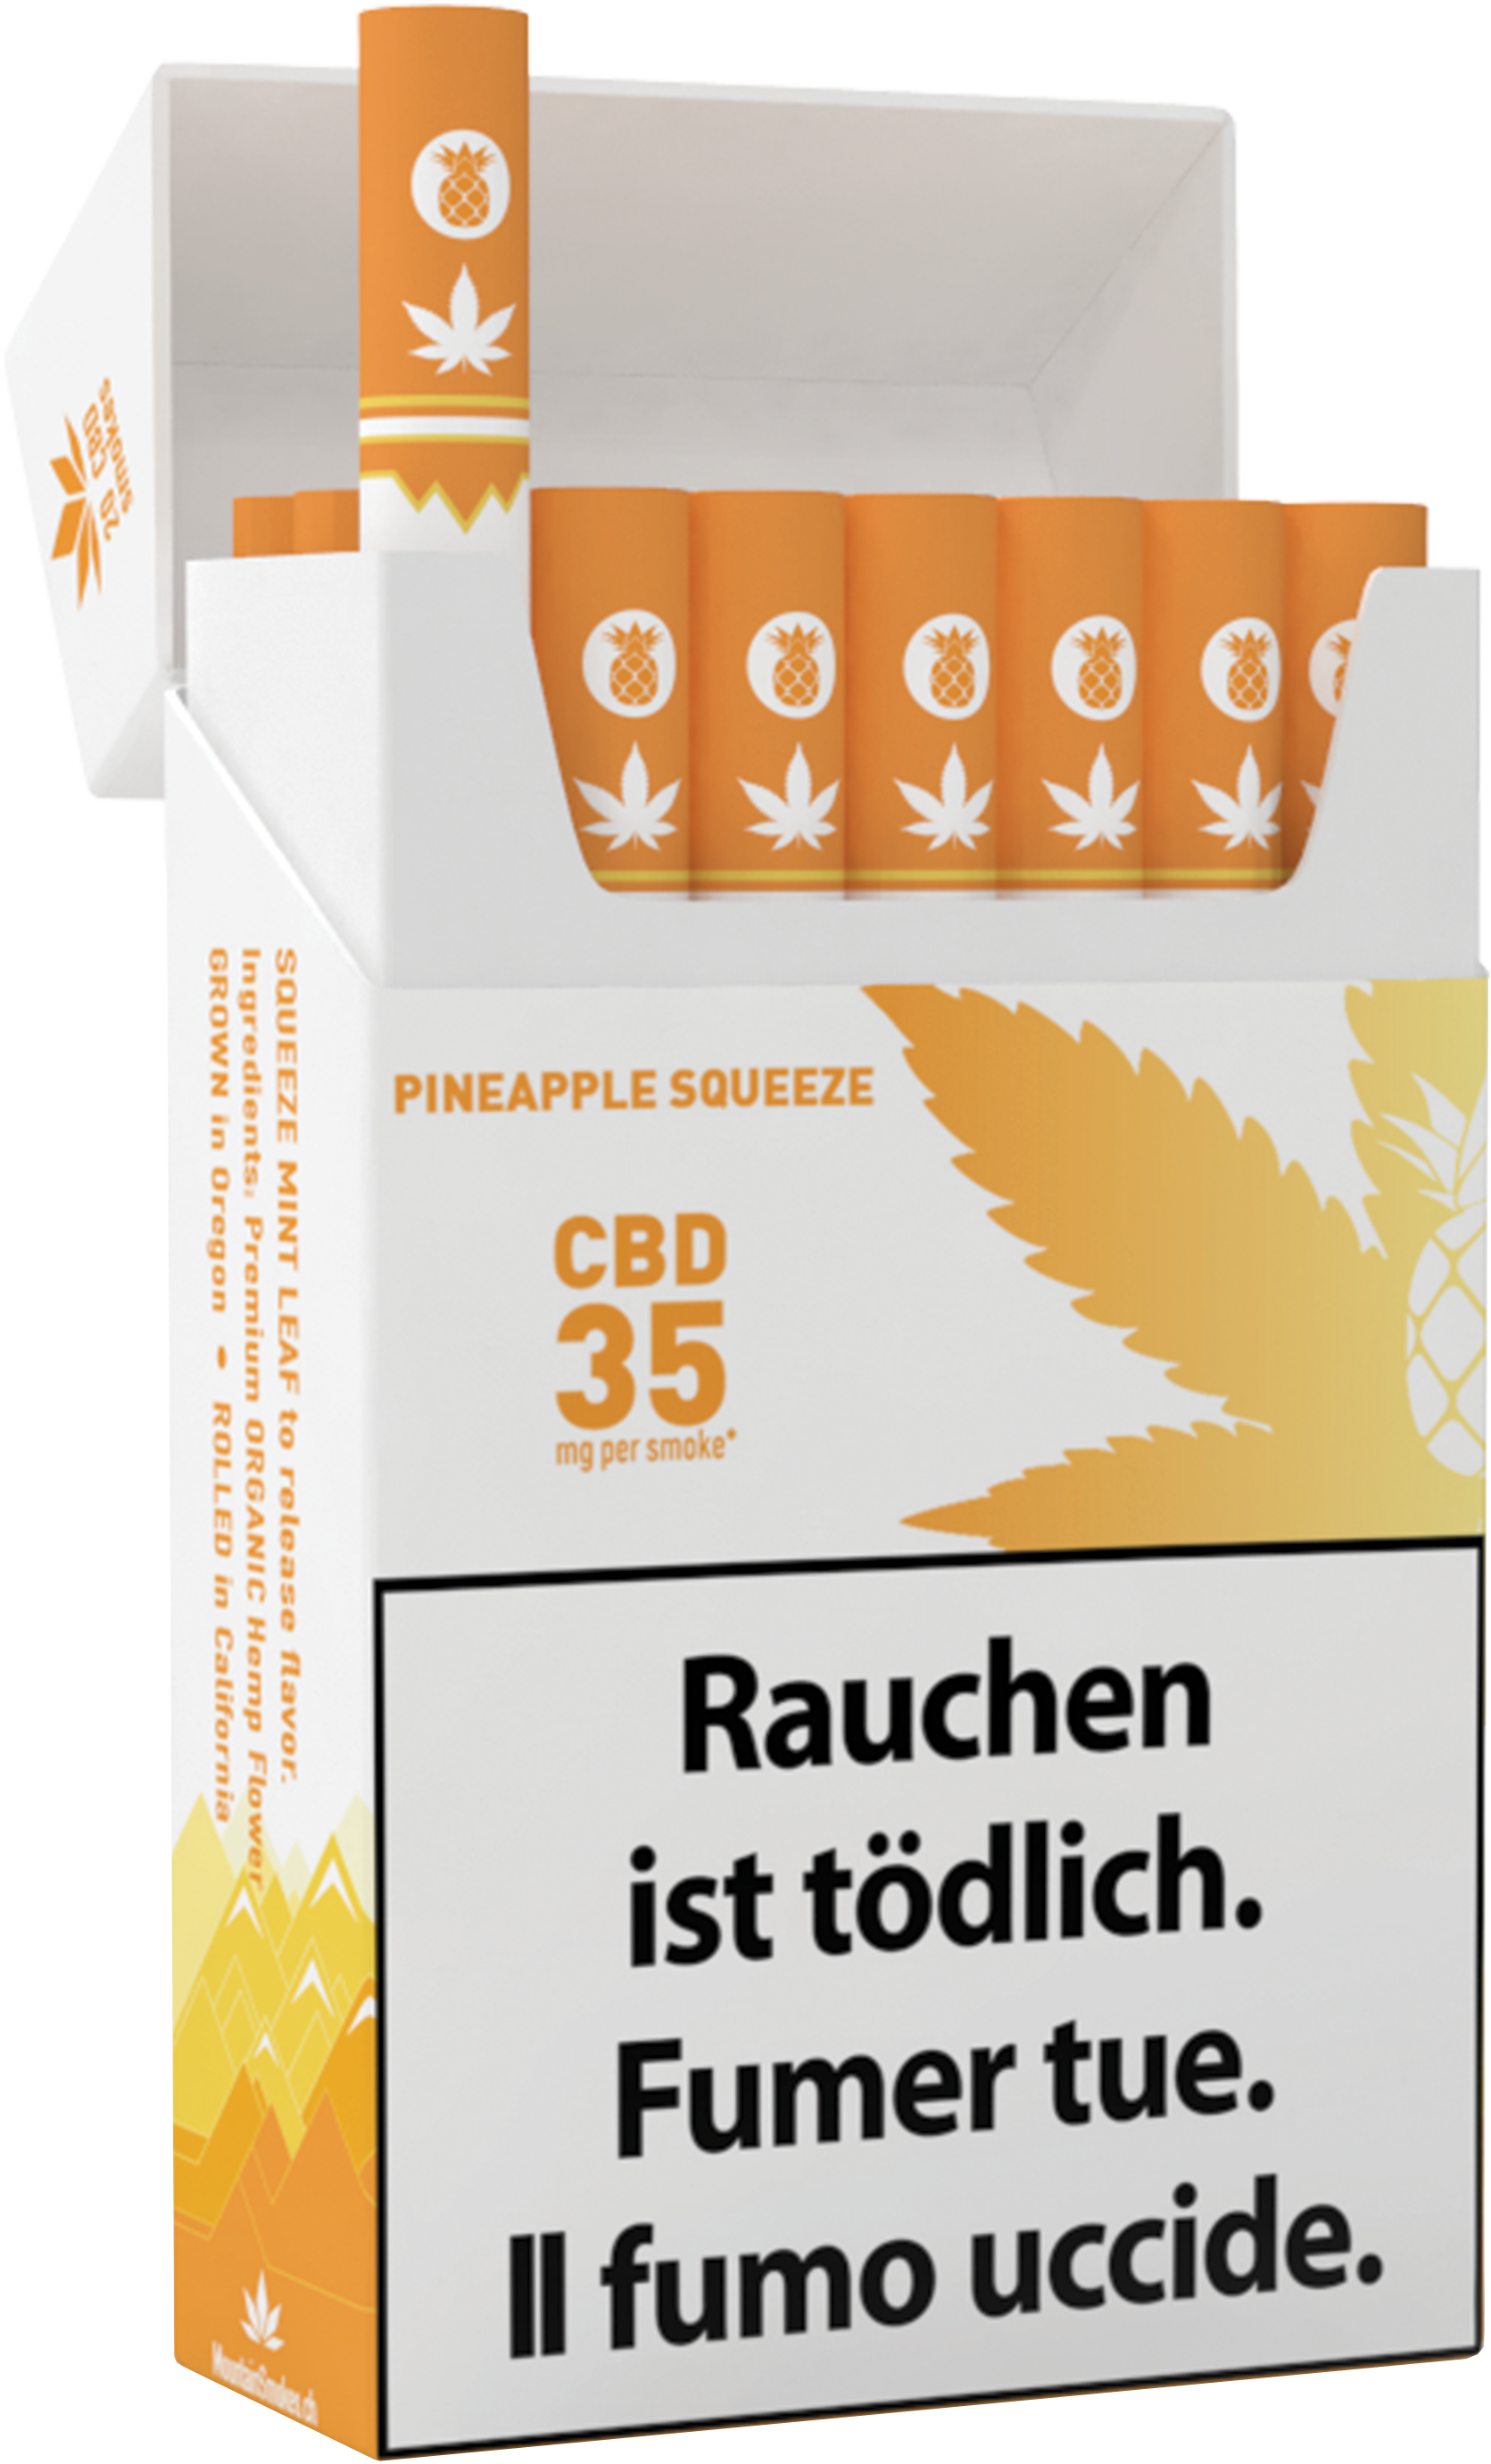 Image of Mountain Smokes CBD Zigaretten Pineapple Squeeze 35mg (1 Stk) bei CBD-Balance.ch